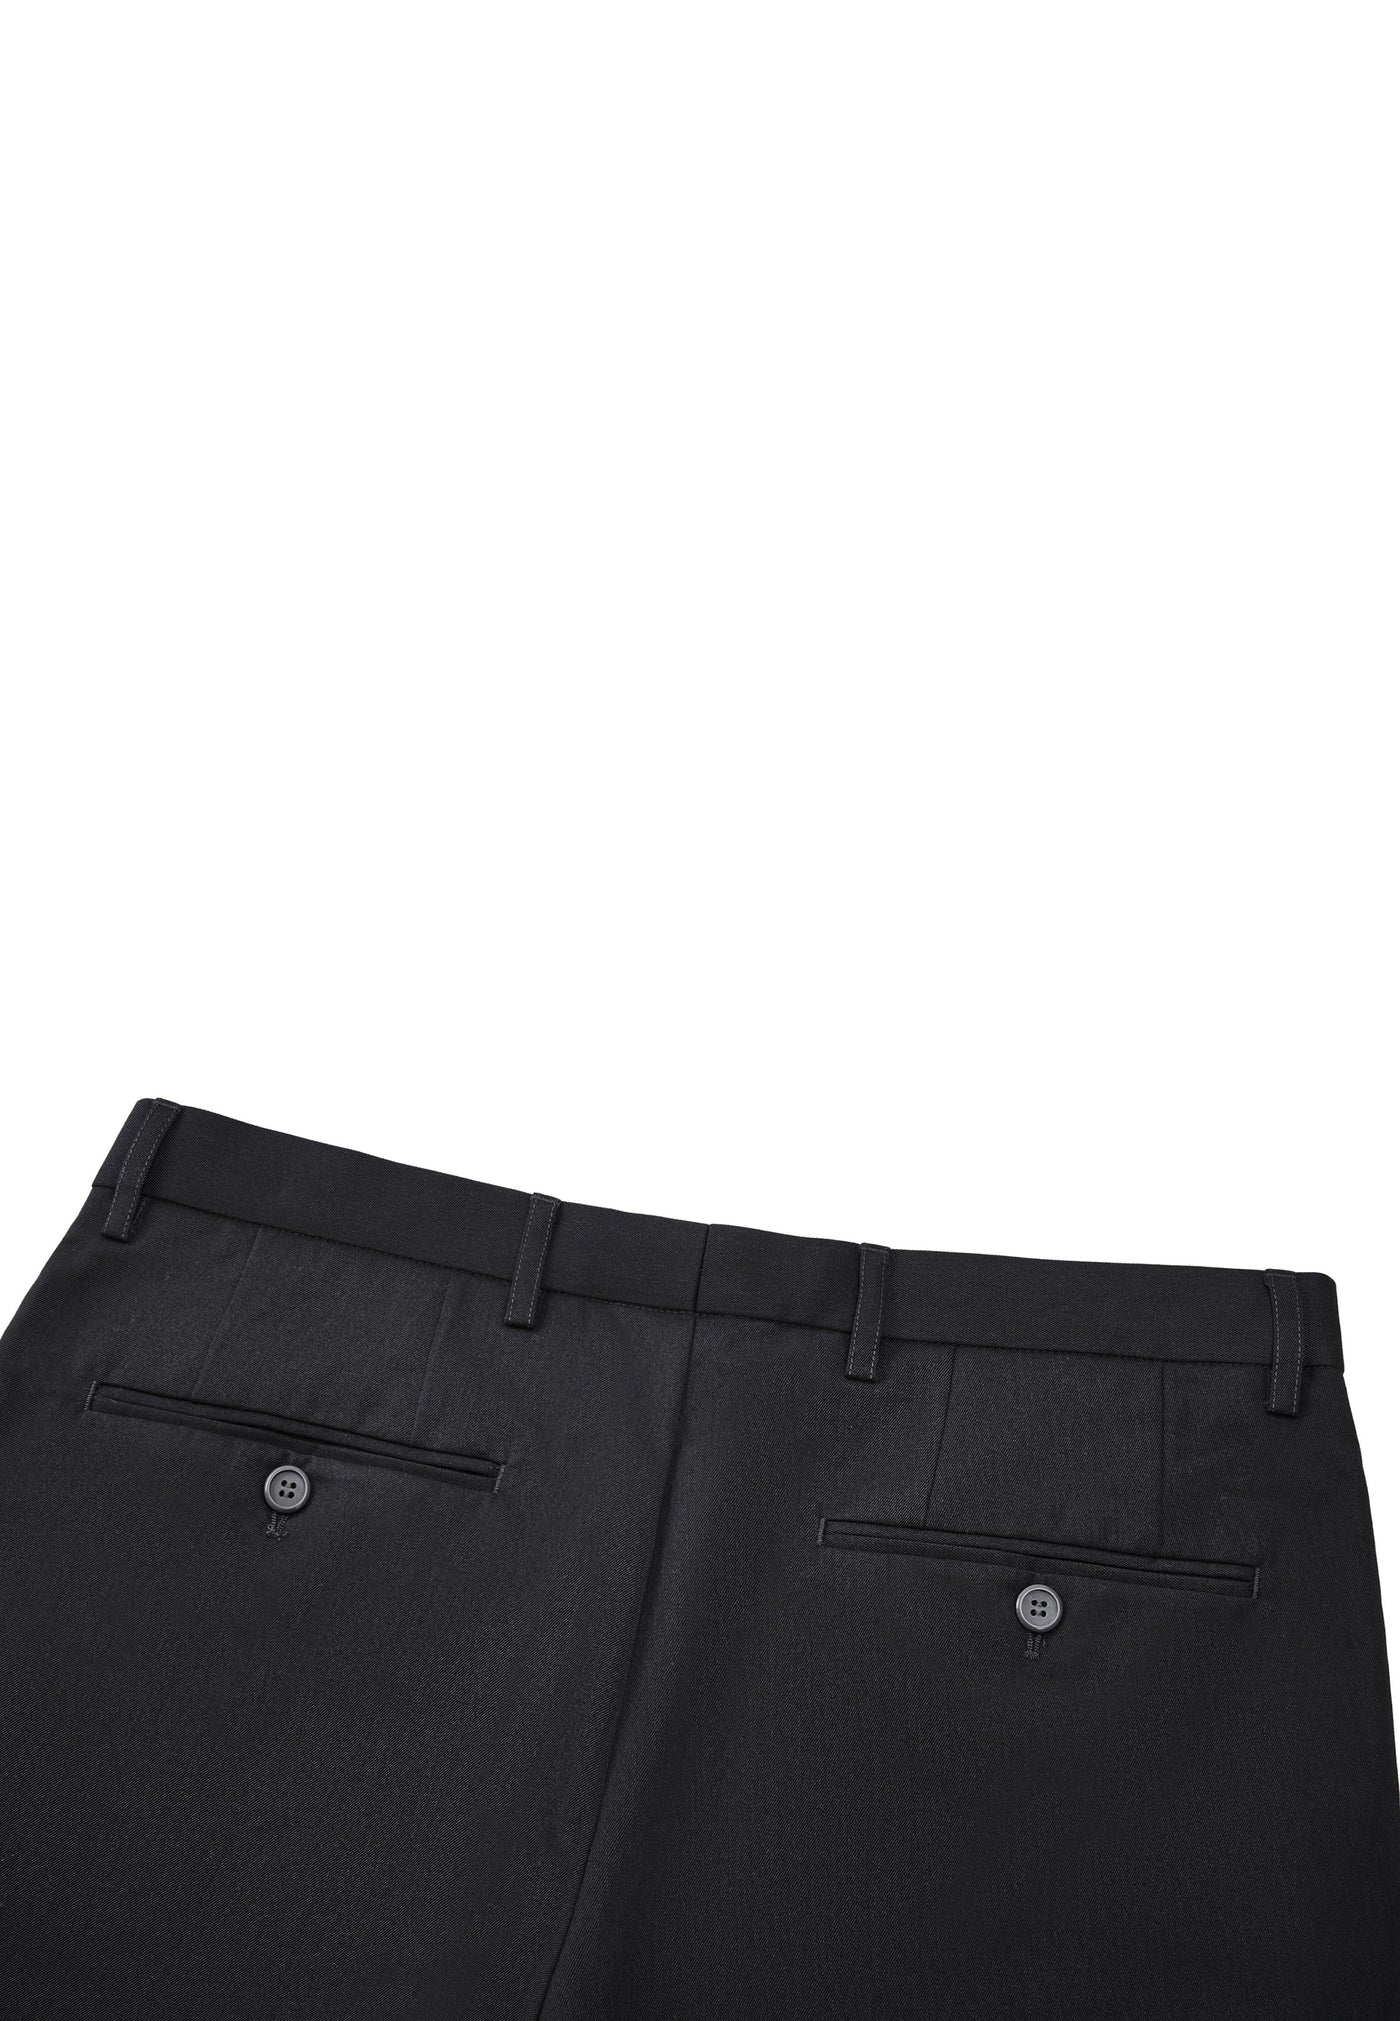 Men Clothing 3M Multi-Way Stretch Formal Pants Regular Fit